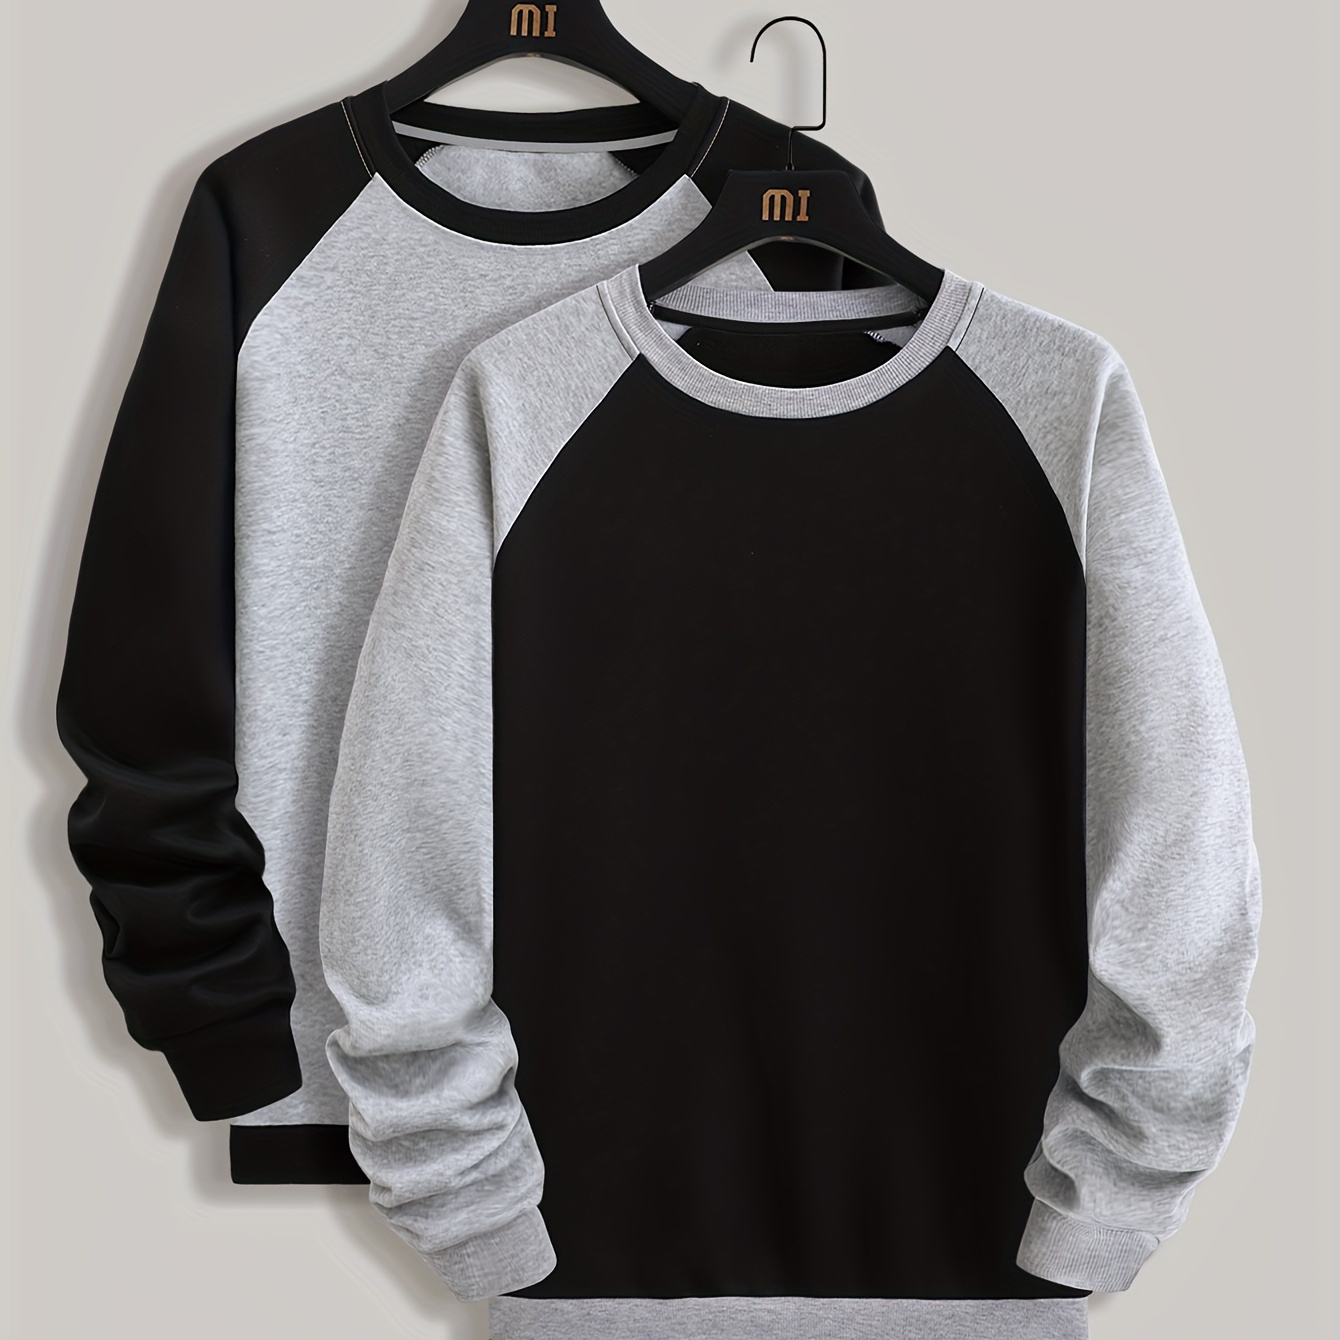 

2pcs Plus Size Men's Contrast Color Raglan Crew Neck Sweatshirts For Sports/workout, Stylish Long Sleeve Sweatshirt Tops For Spring/autumn, Men's Clothing